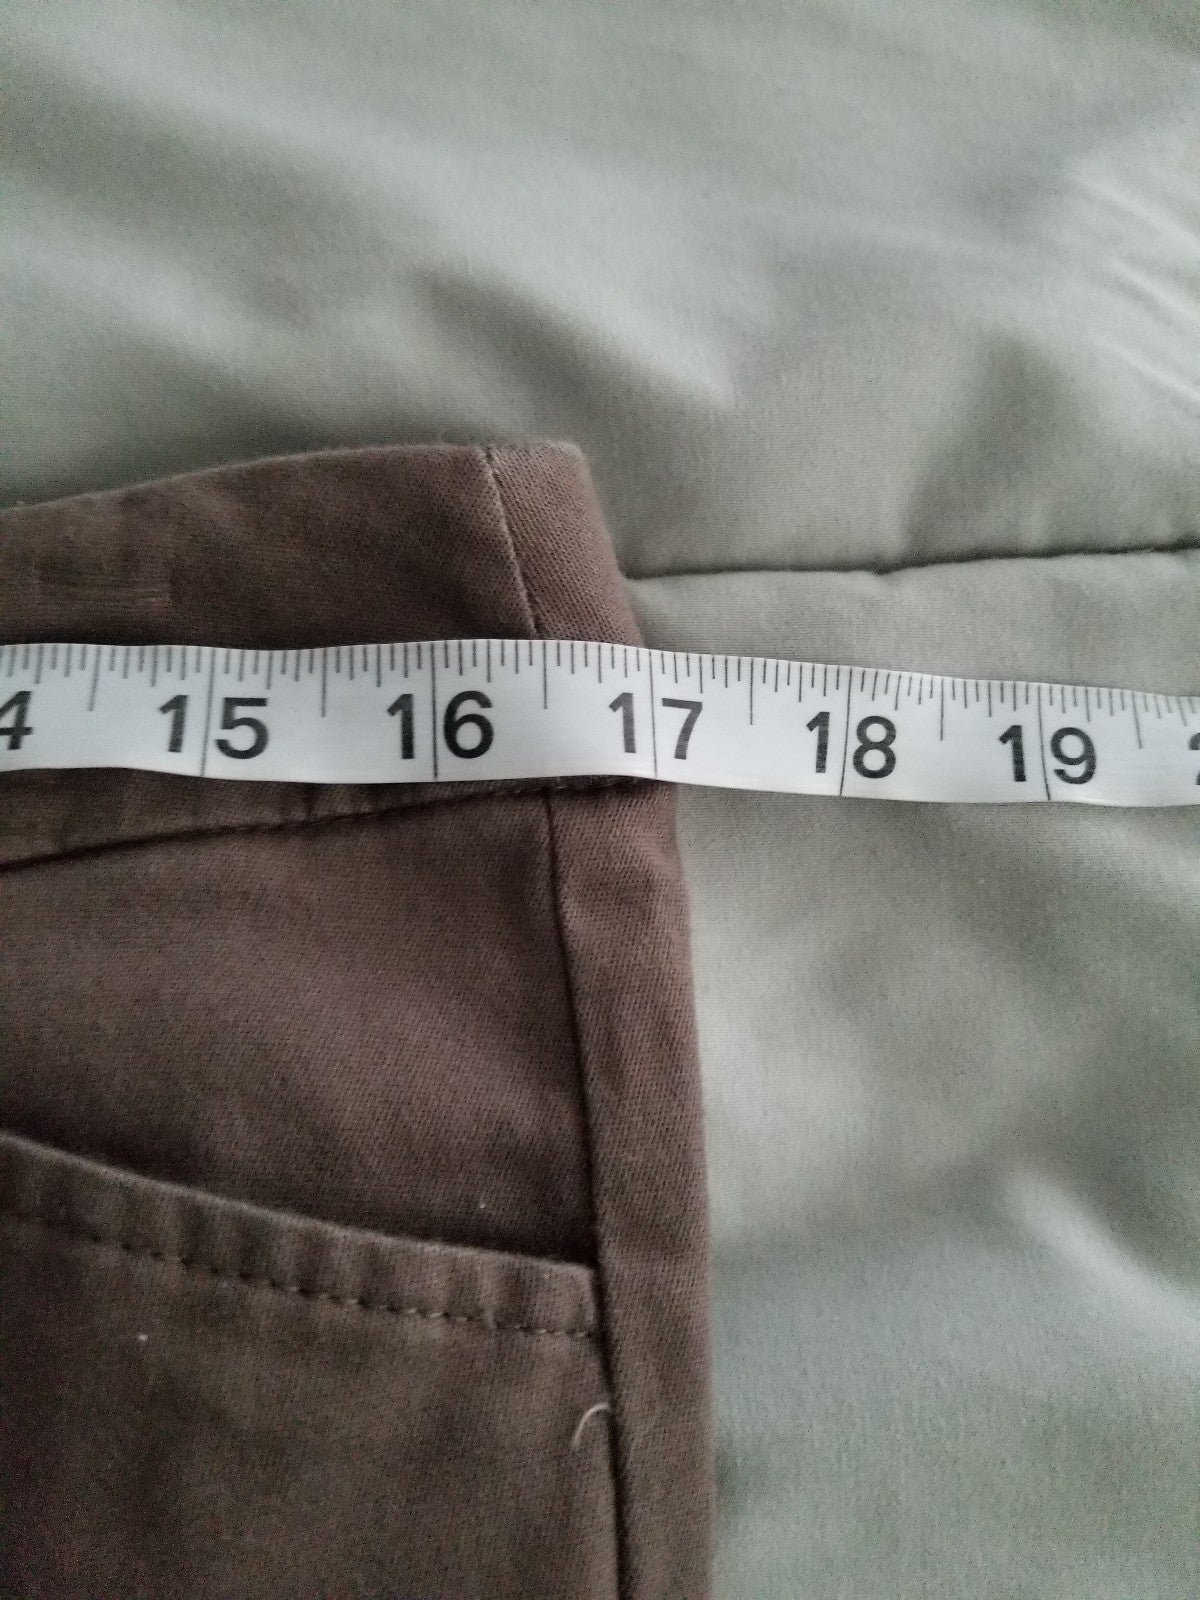 Cheap St. John´s Bay Cropped Pants pC9ilULnd on sale